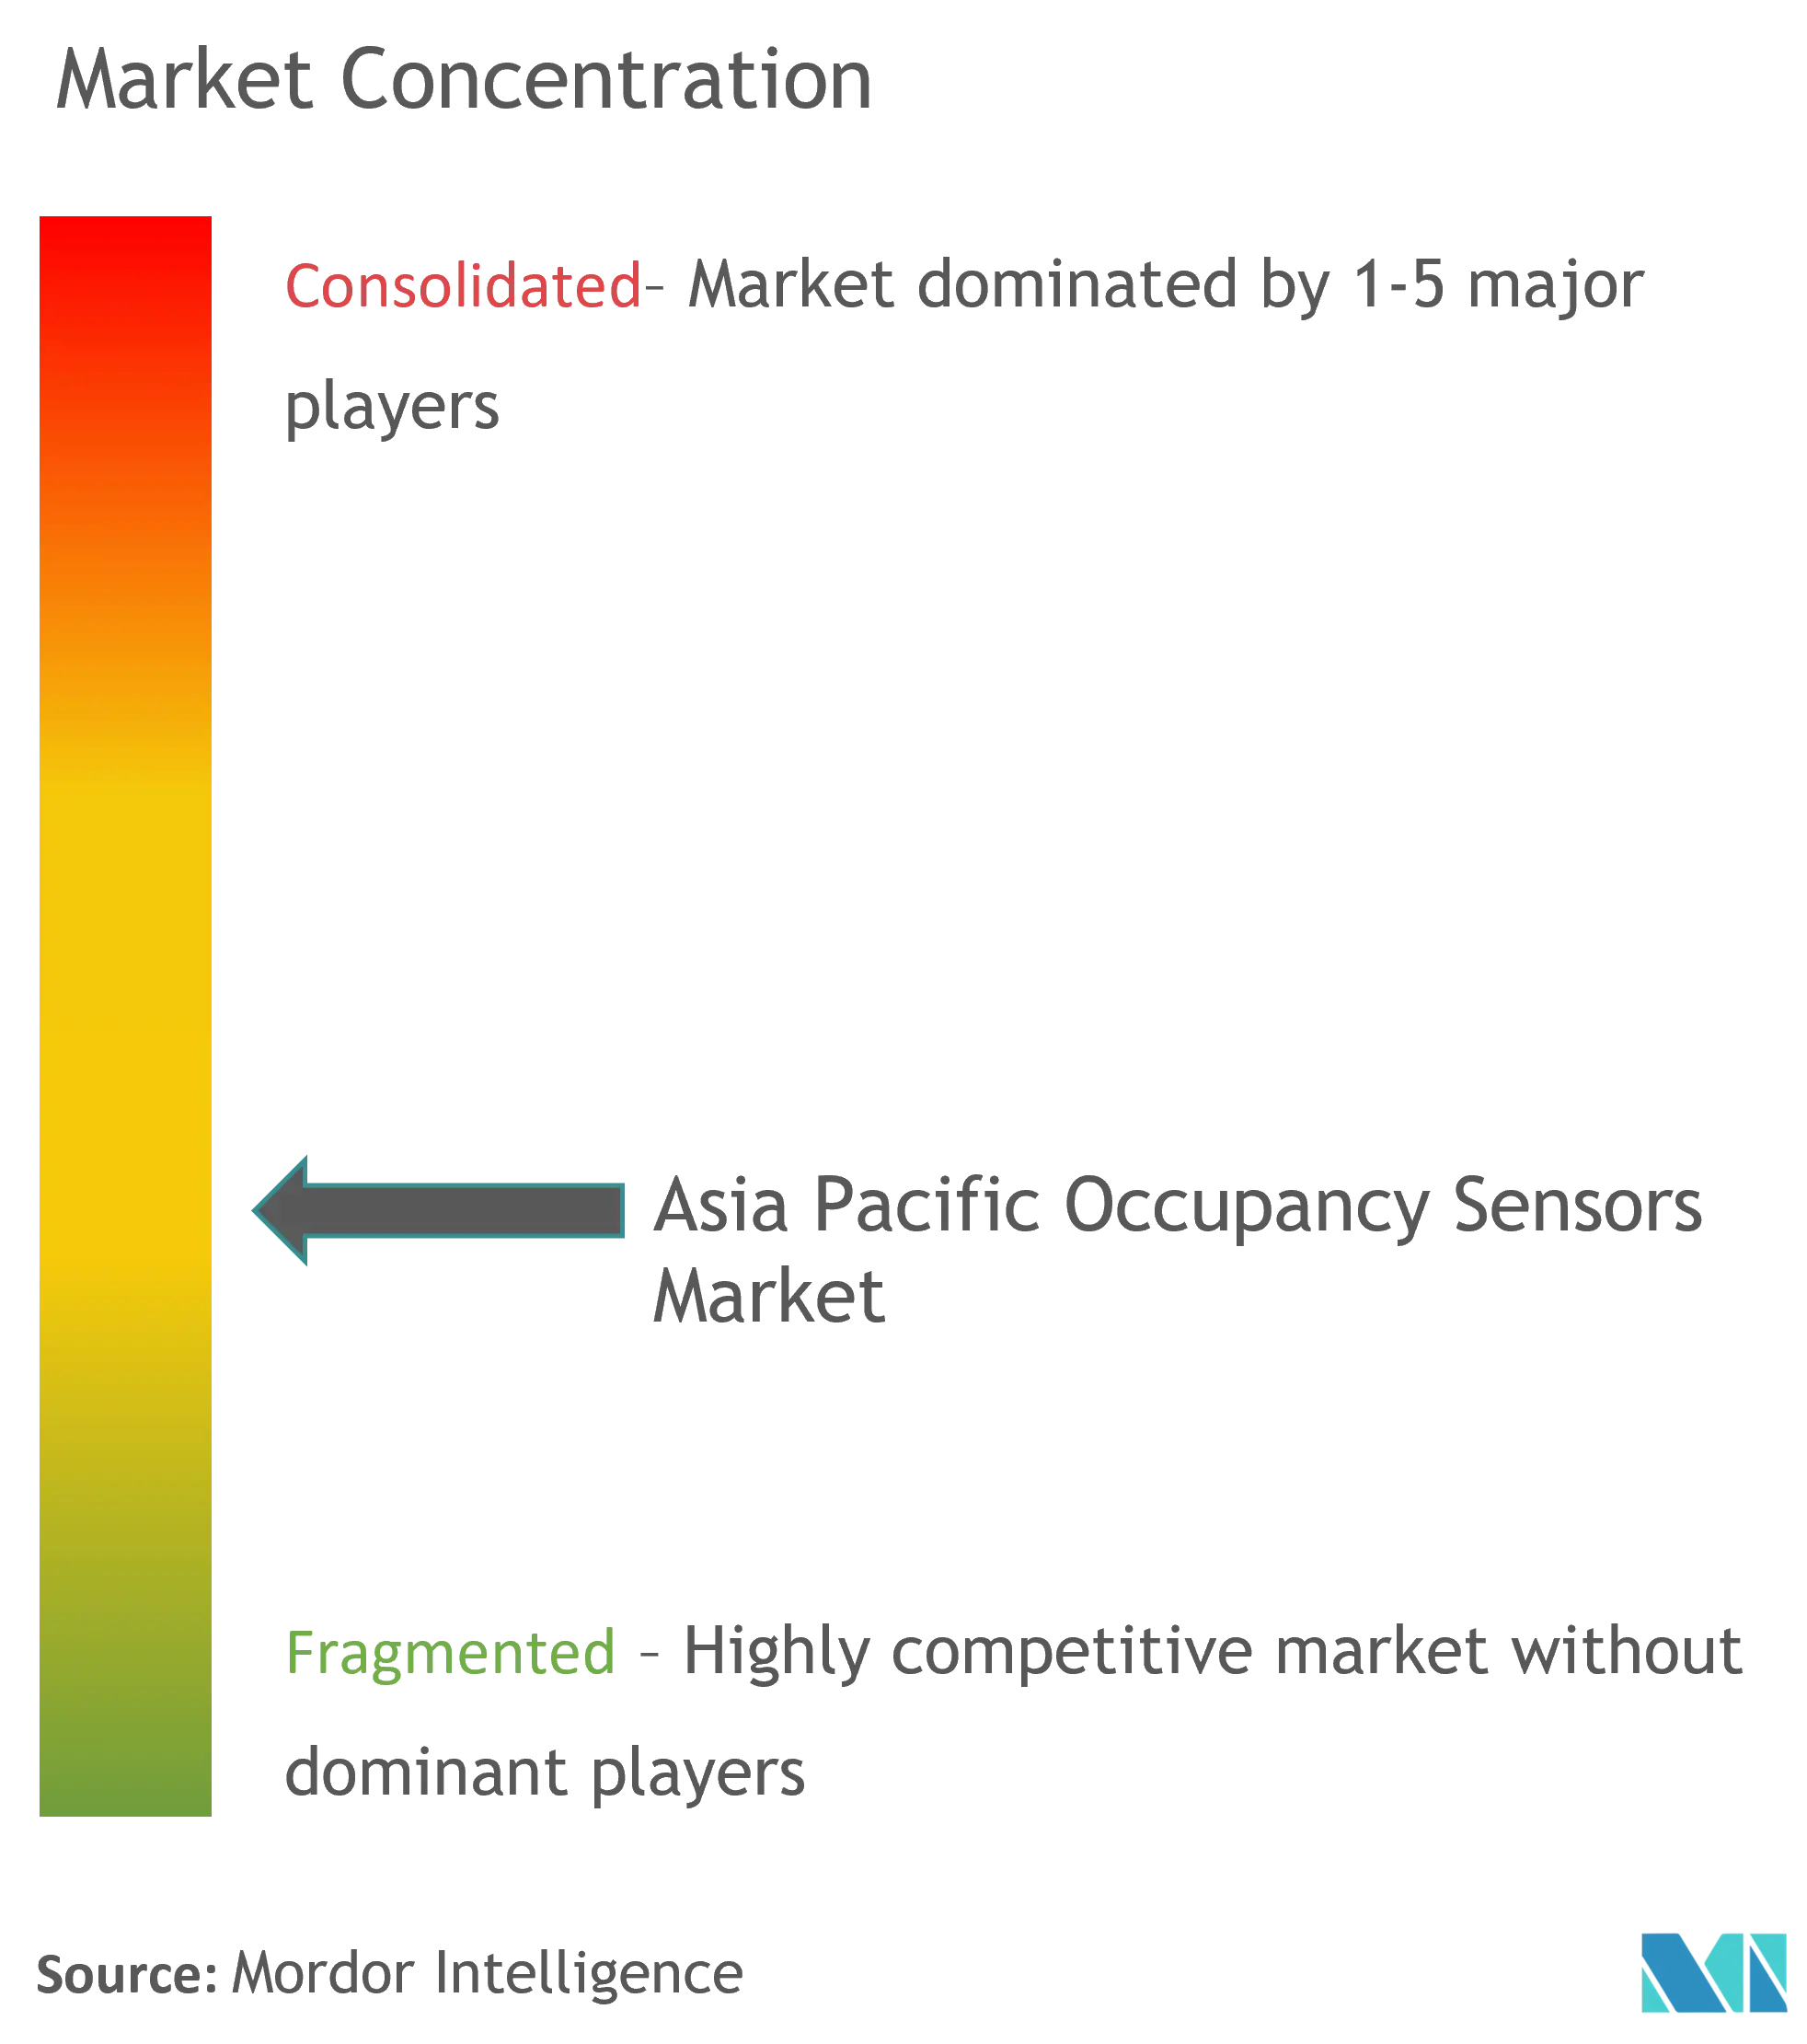 Asia Pacific Occupancy Sensors Market